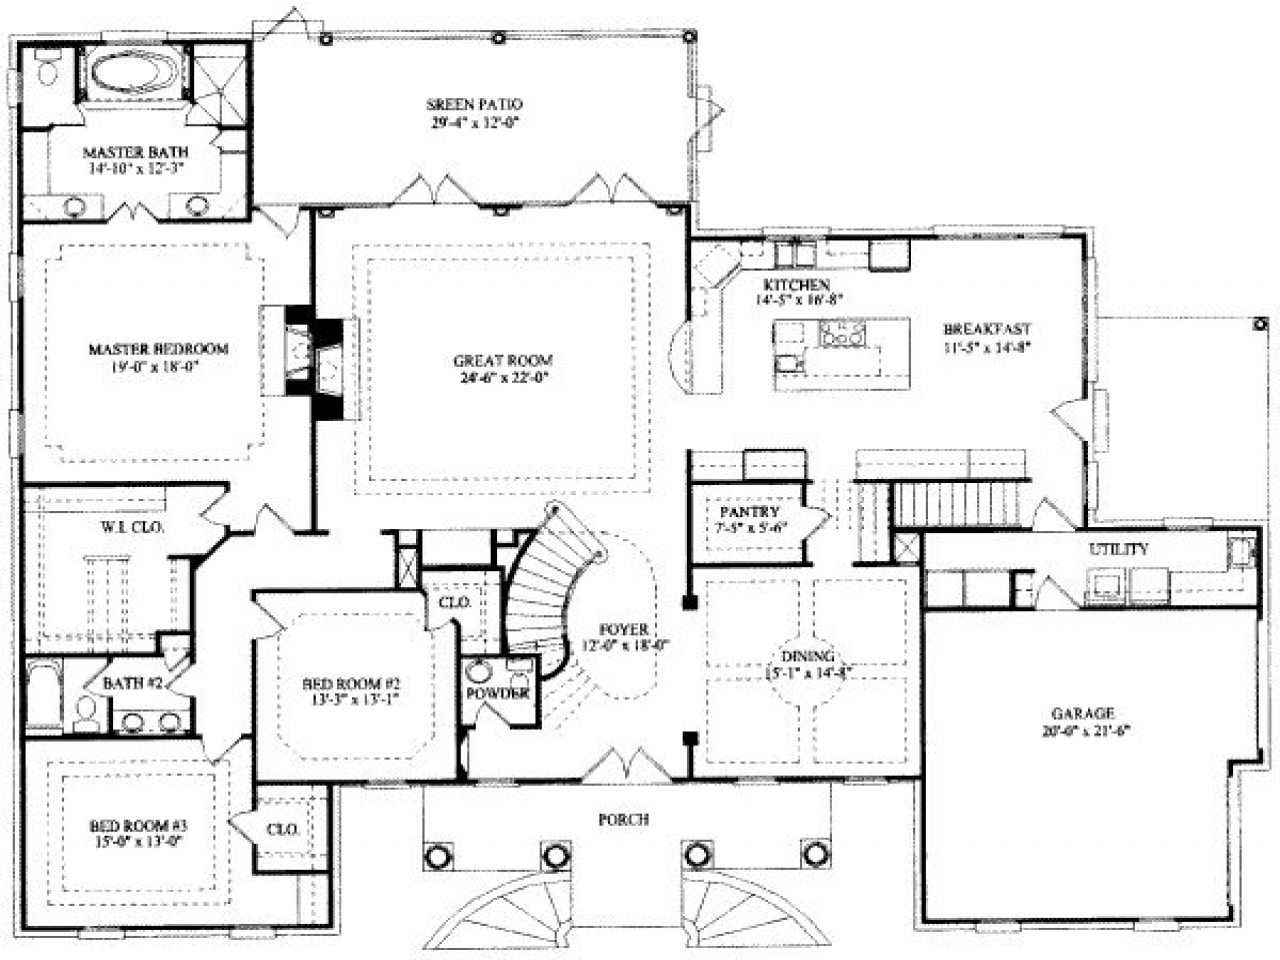 8 Bedroom Ranch House Plans 7 Bedroom House Floor Plans, 7